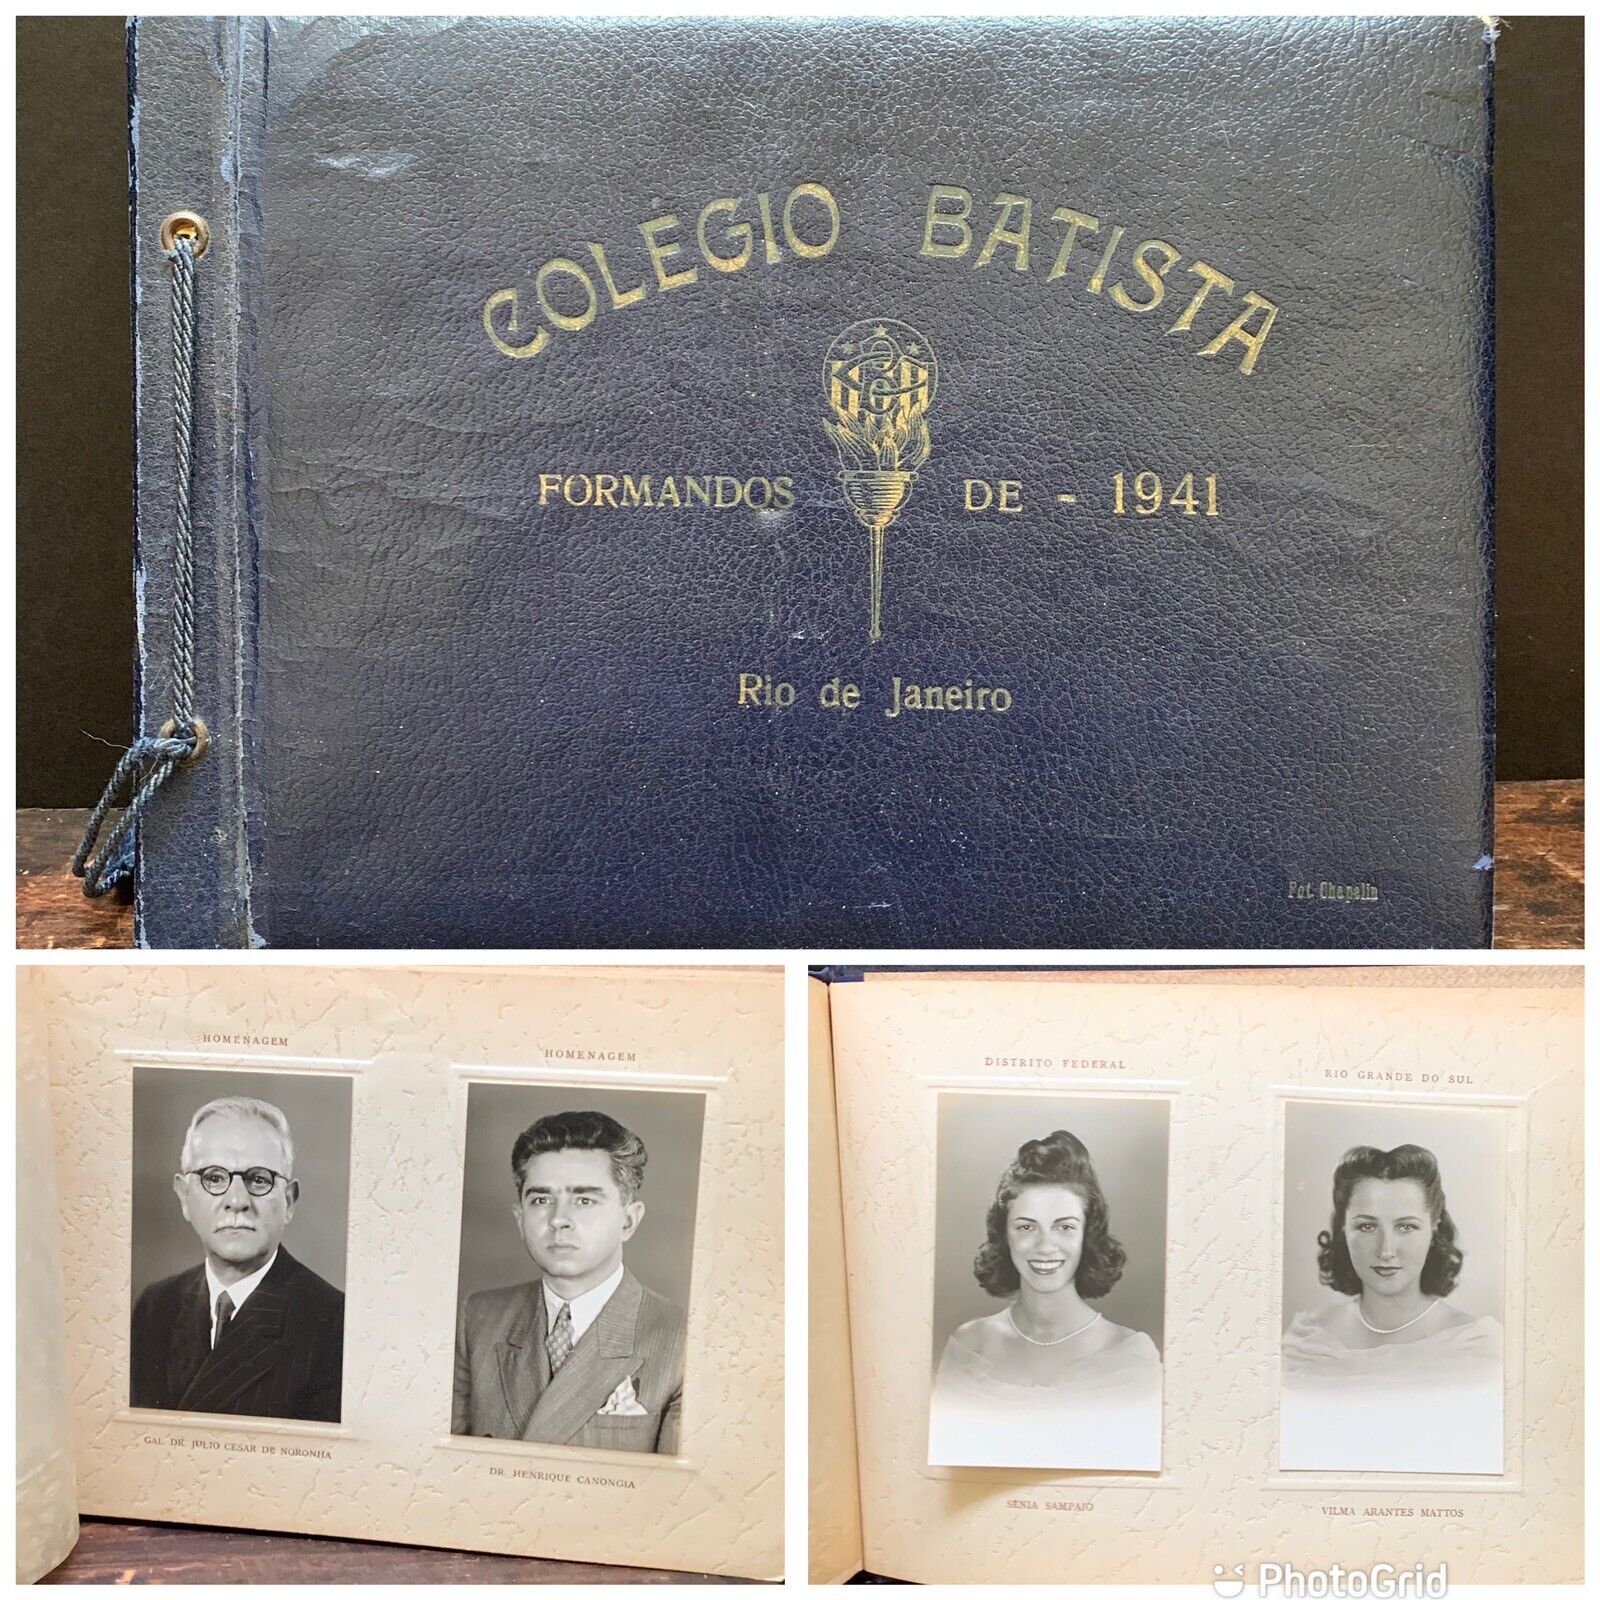 1941 REAL PHOTOS Colégio Batista do Rio de Janeiro College Yearbook? Brazil WWII